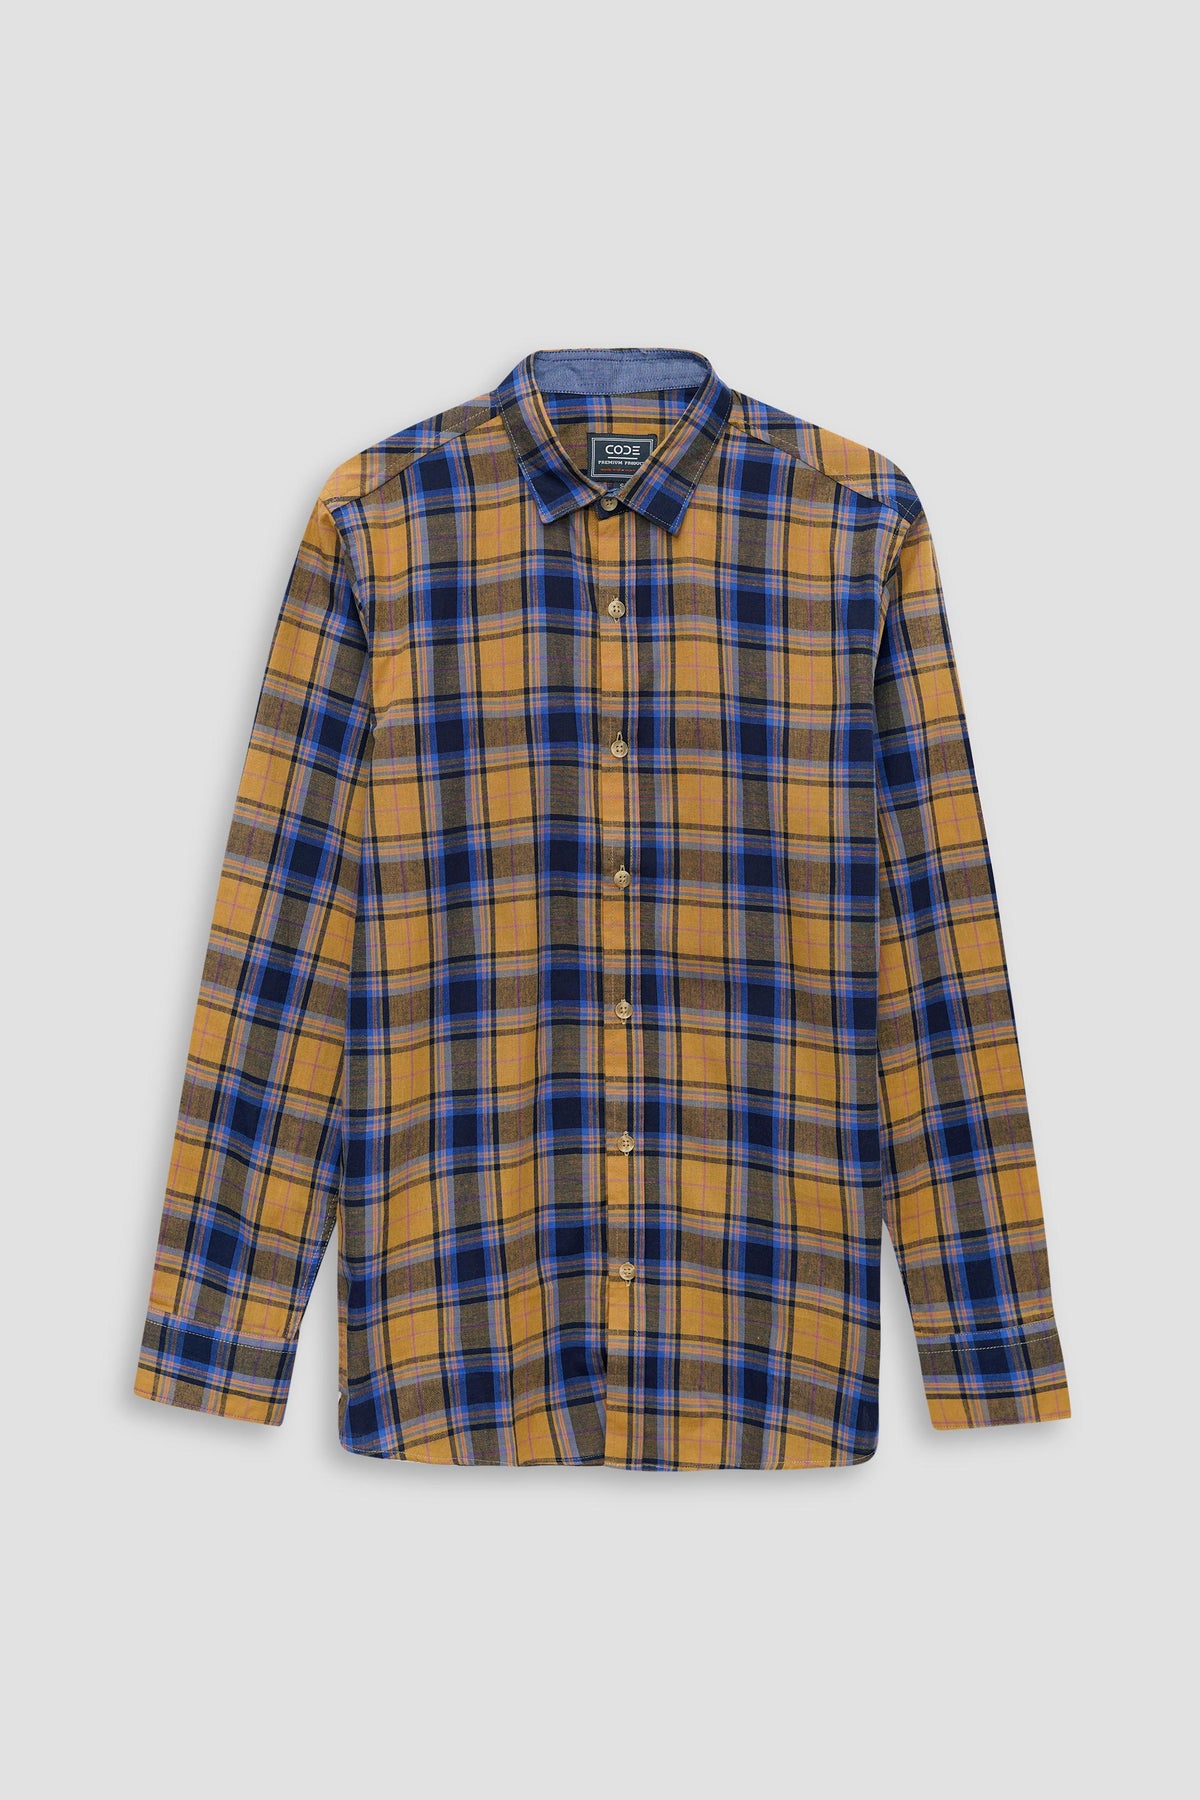 Check Yellow/Blue Casual Shirt